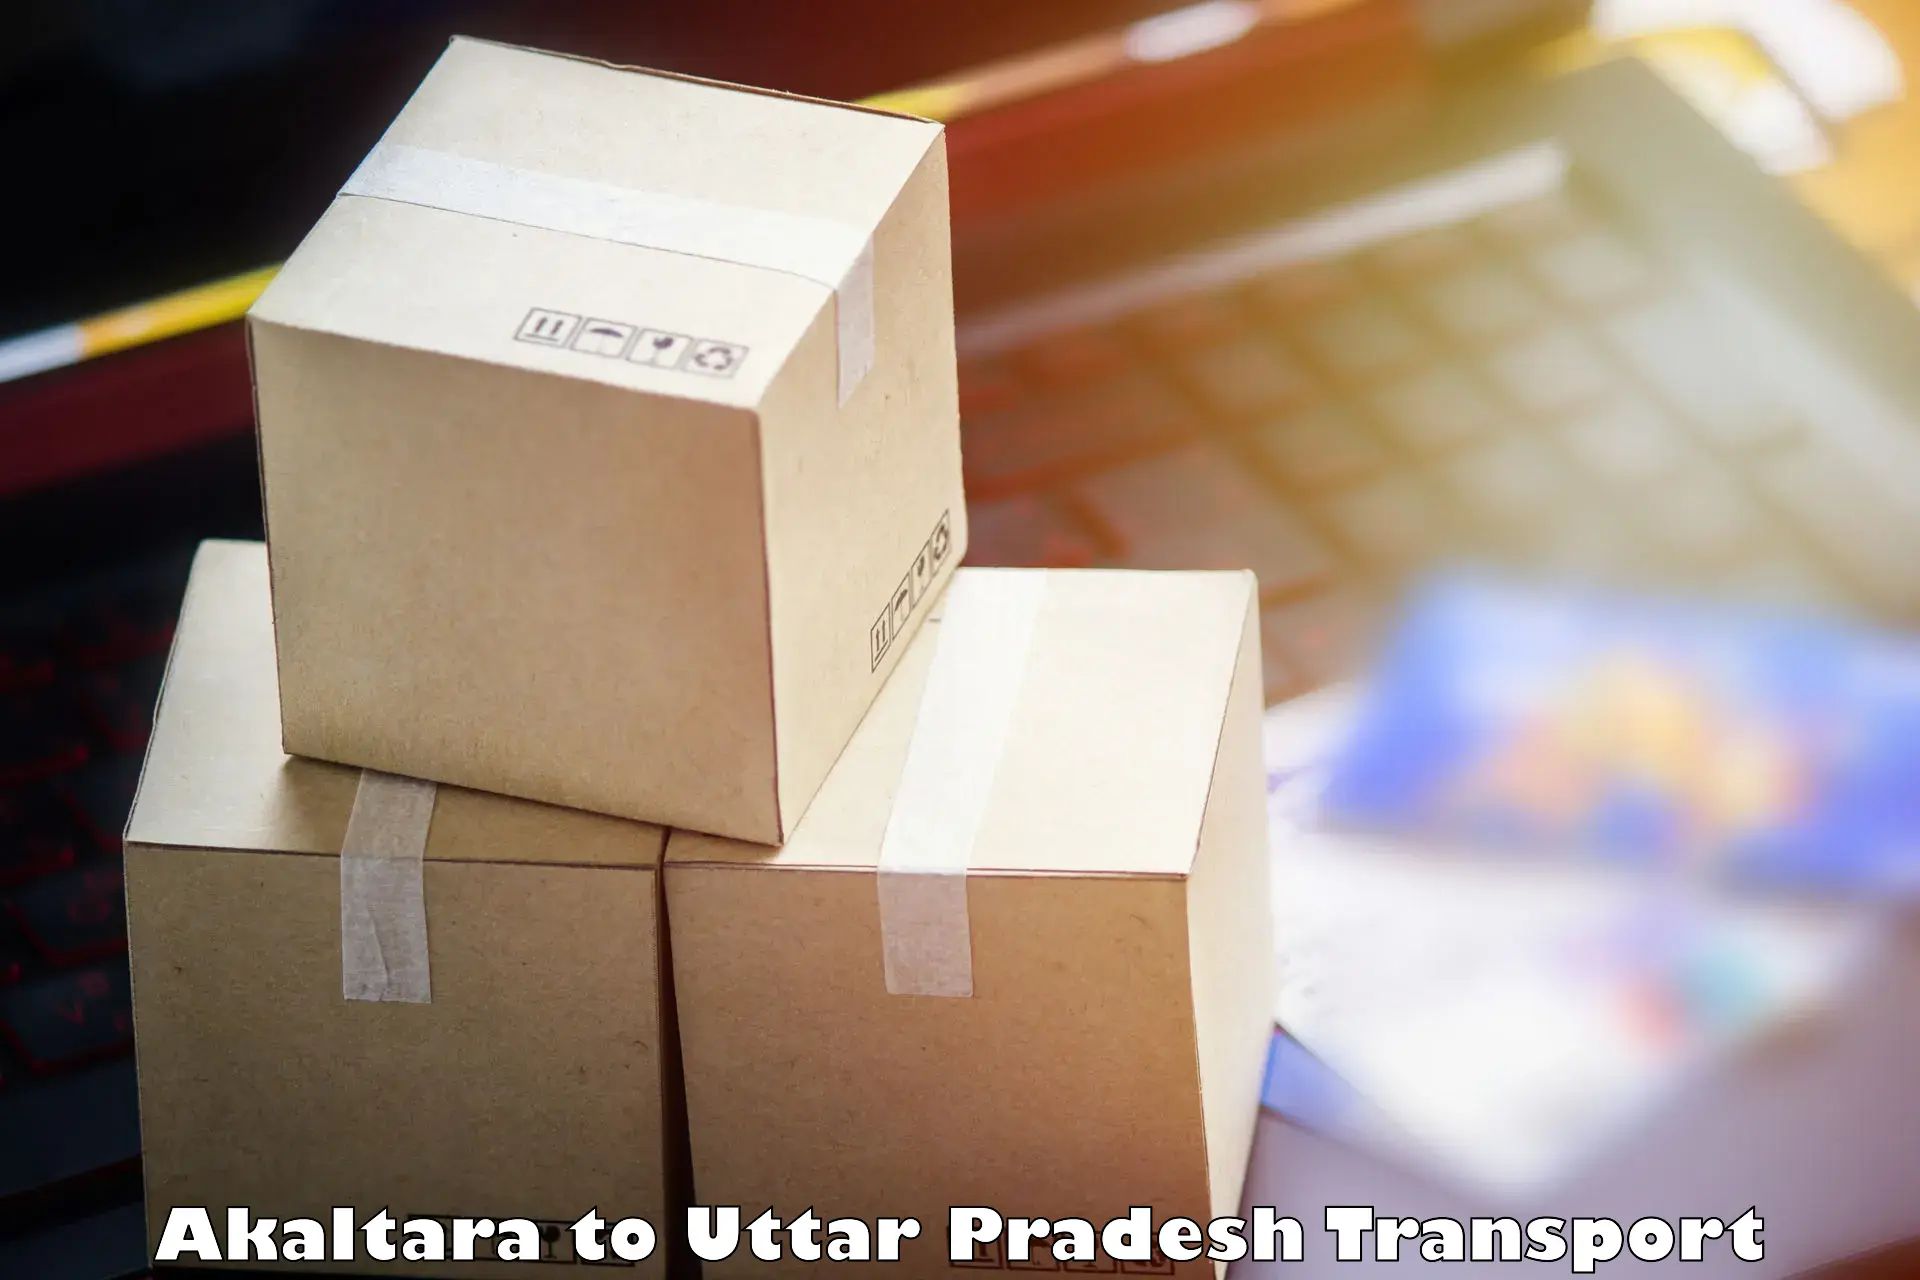 Truck transport companies in India Akaltara to Atarra